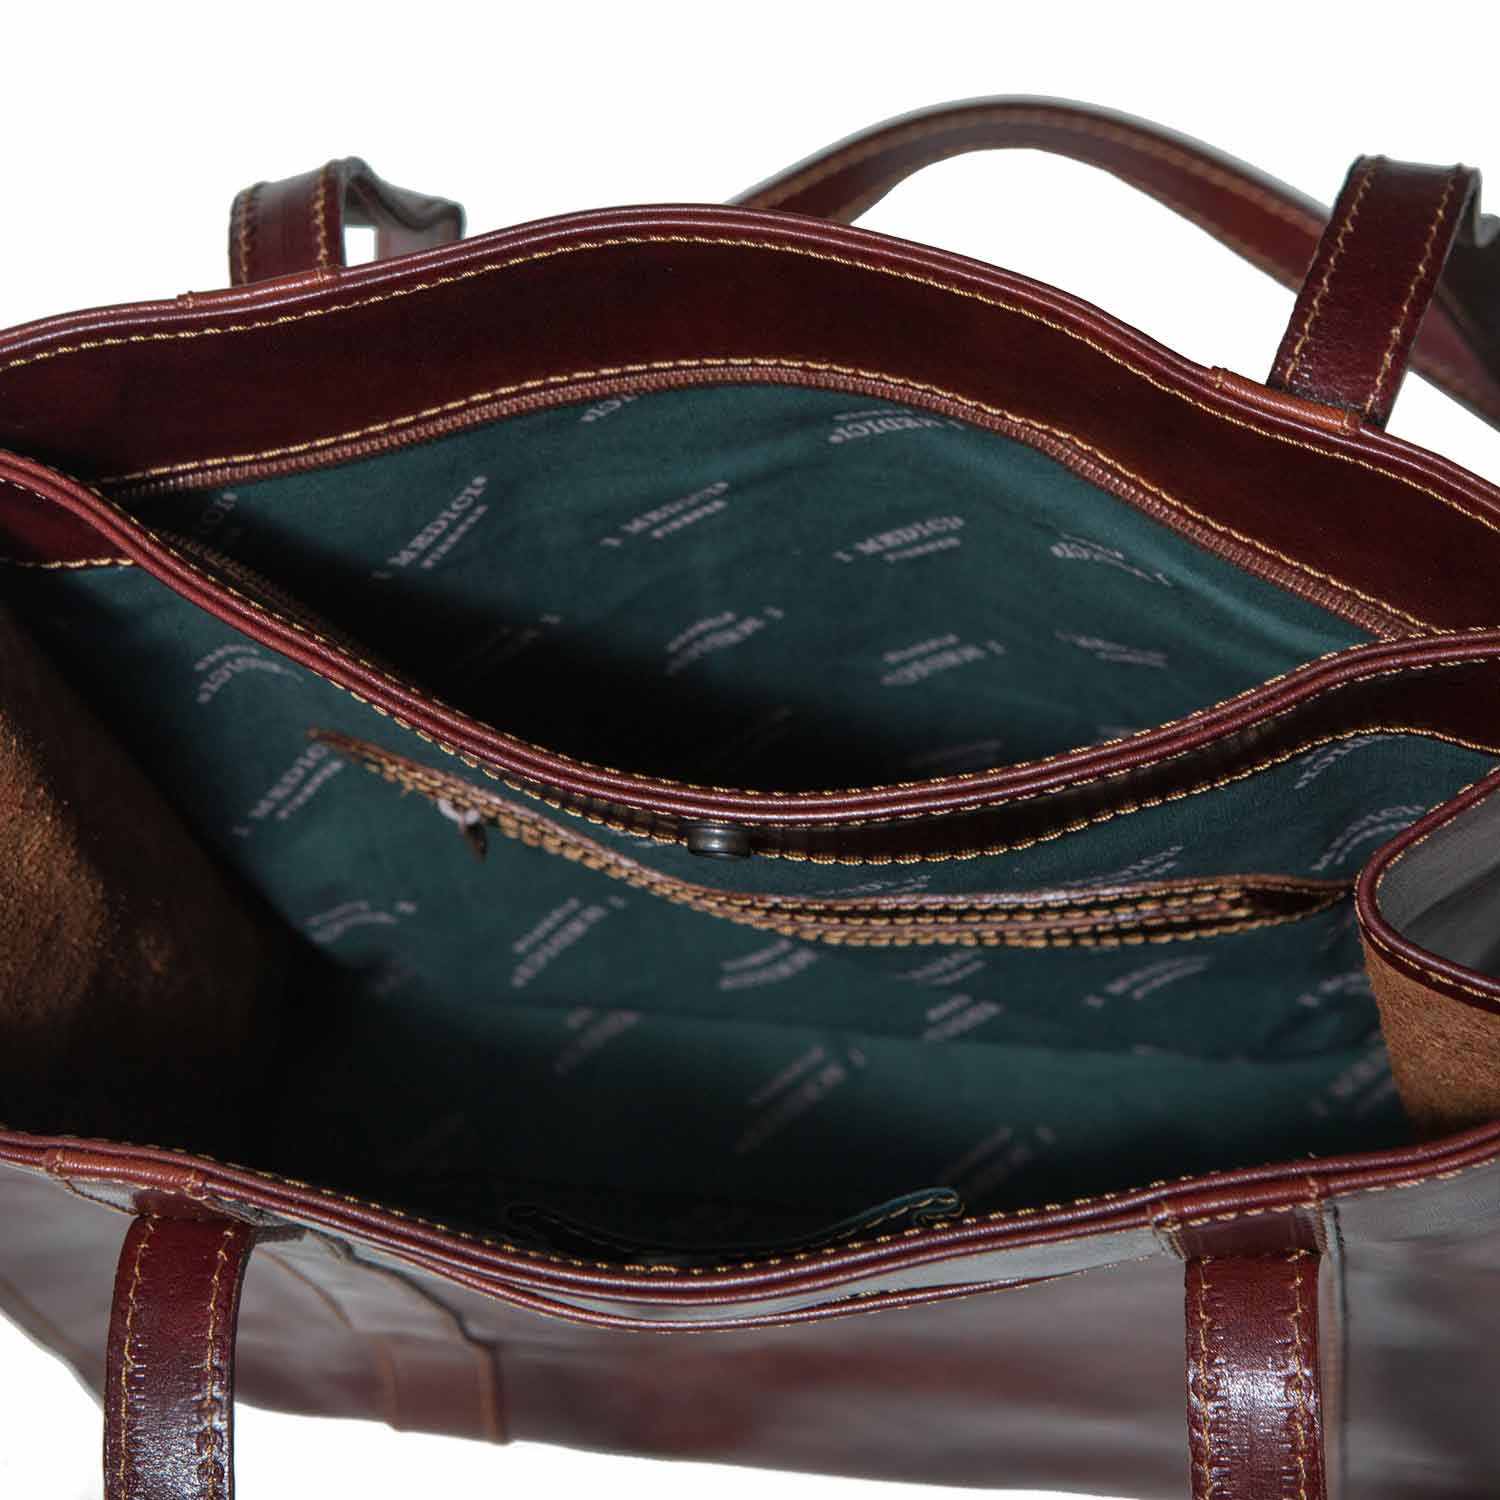 MEZZO Medium Leather Tote Bag, Handbag